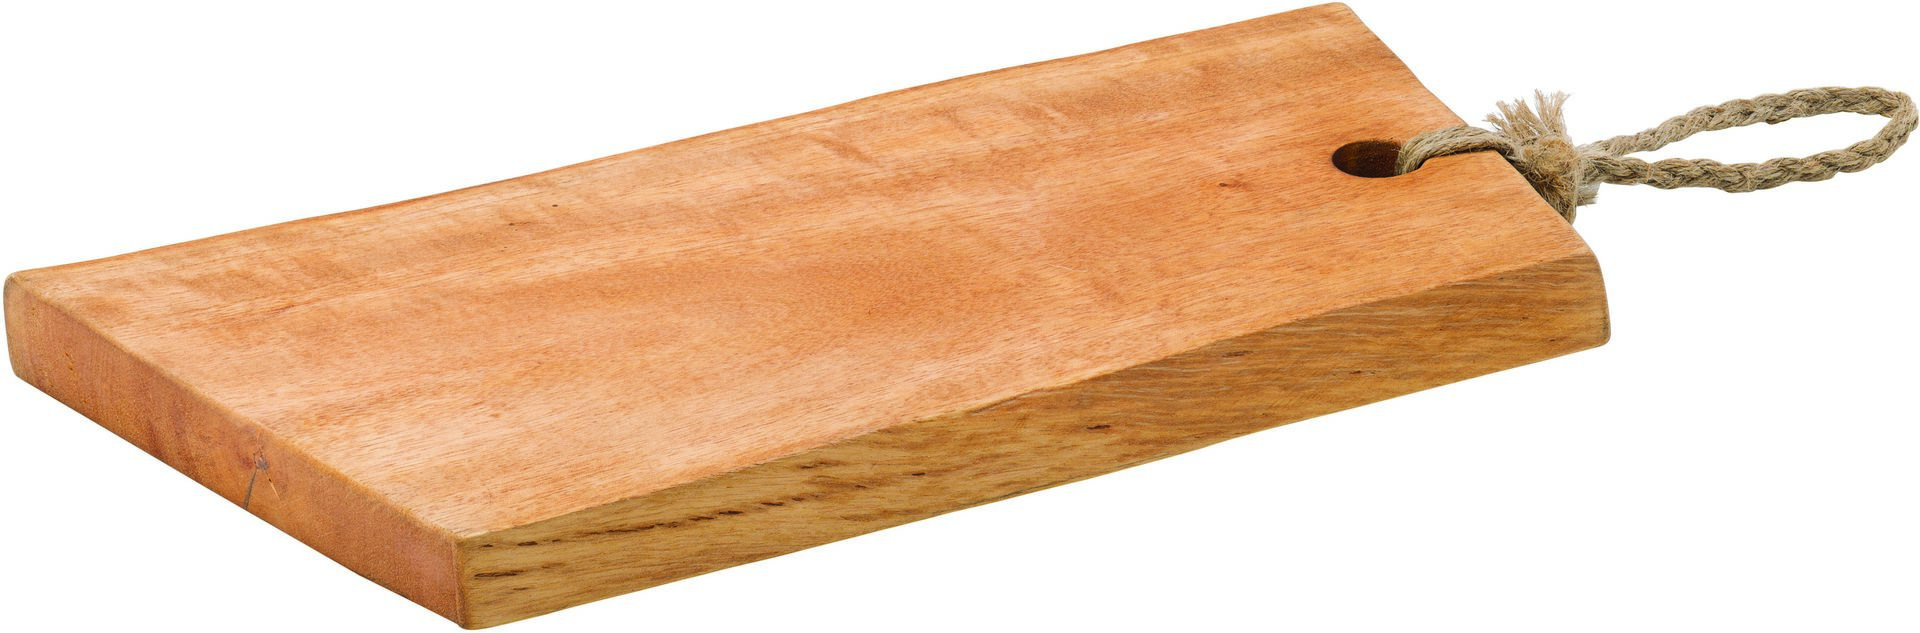 Arizona Angled Plank 14